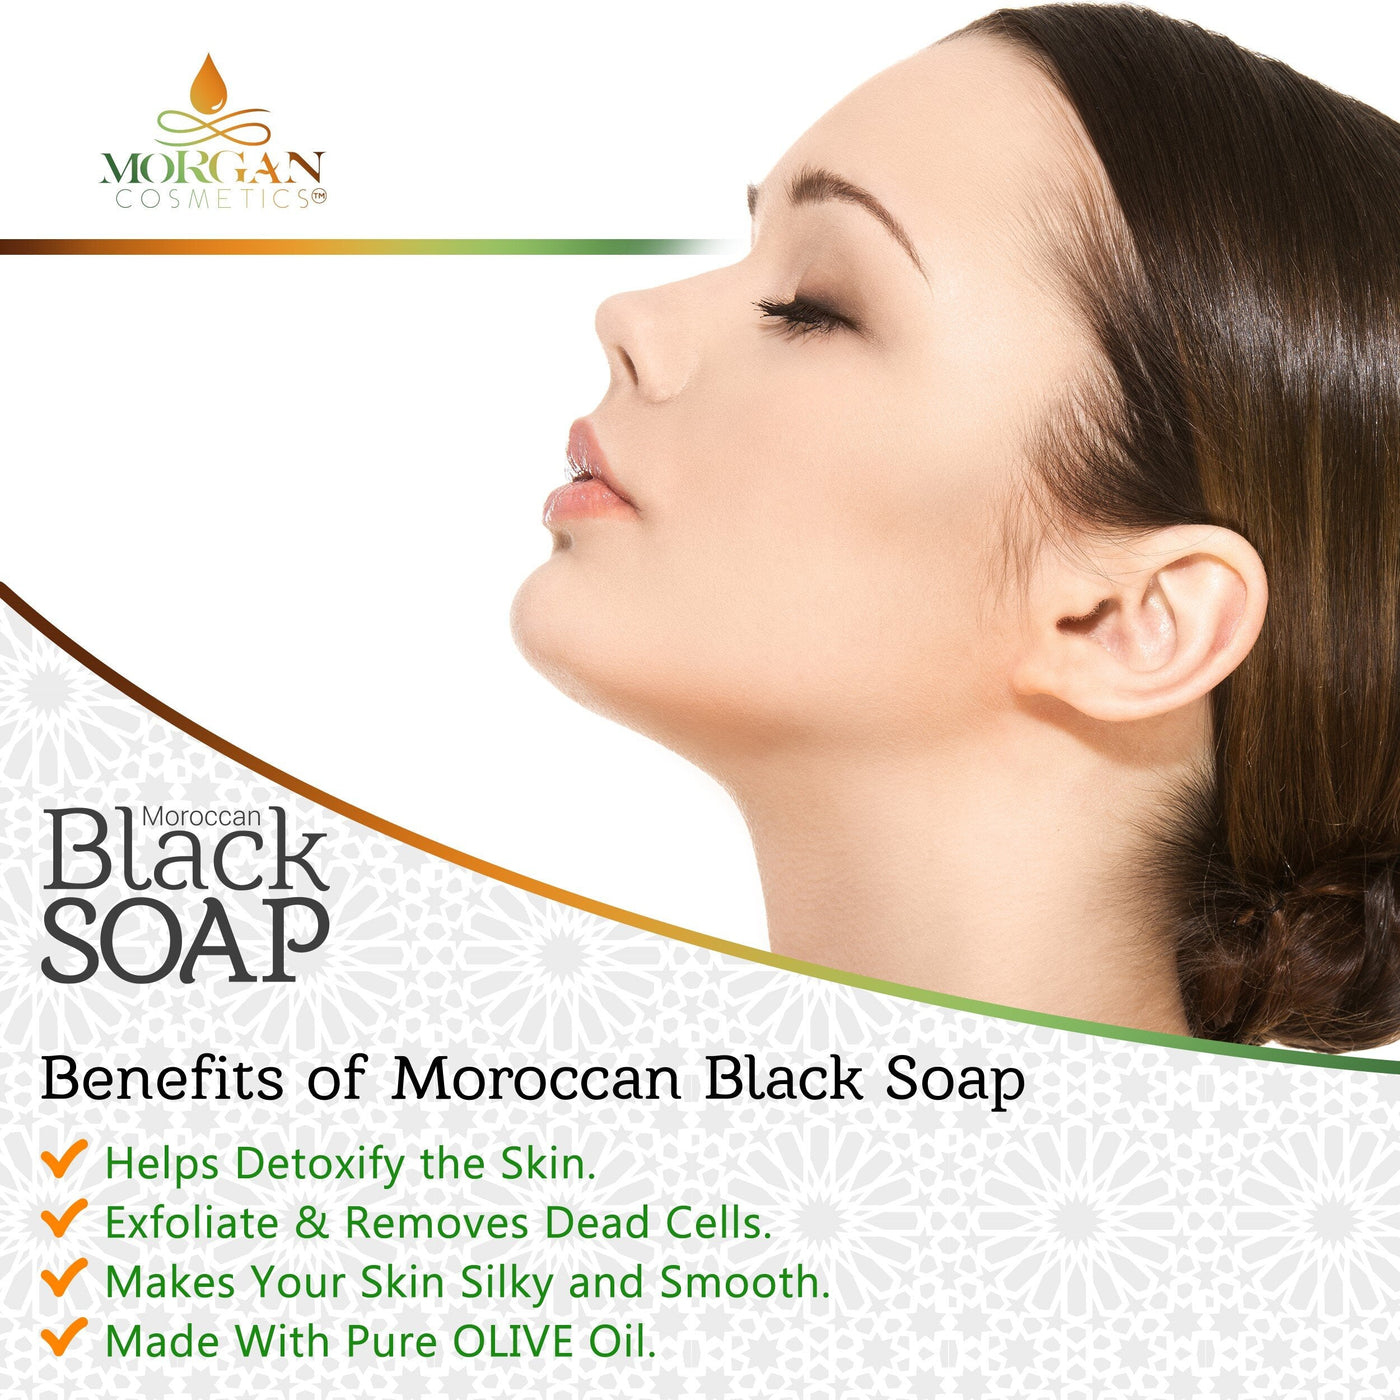 MOROCCAN BLACK SOAP WITH ROSE 8 OZ by Morgan Cosmetics